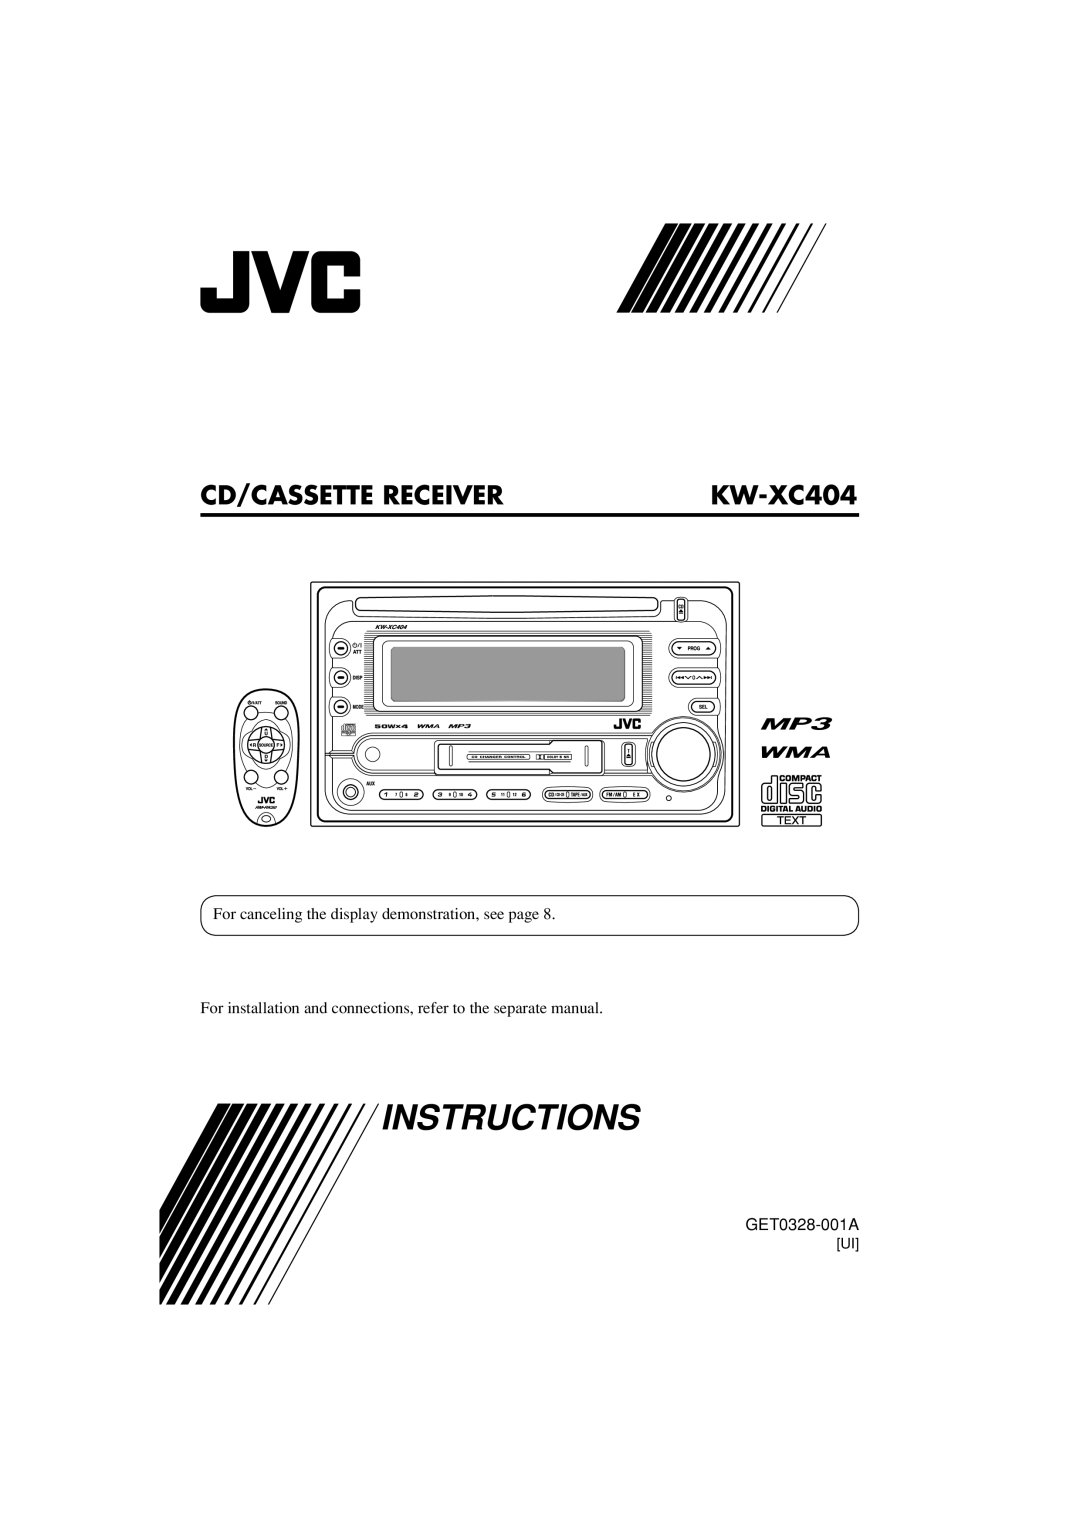 JVC W-XC406, KW-XC405 manual Cd/Cassette Receiver, KW-XC404, Instructions, GET0328-001A 